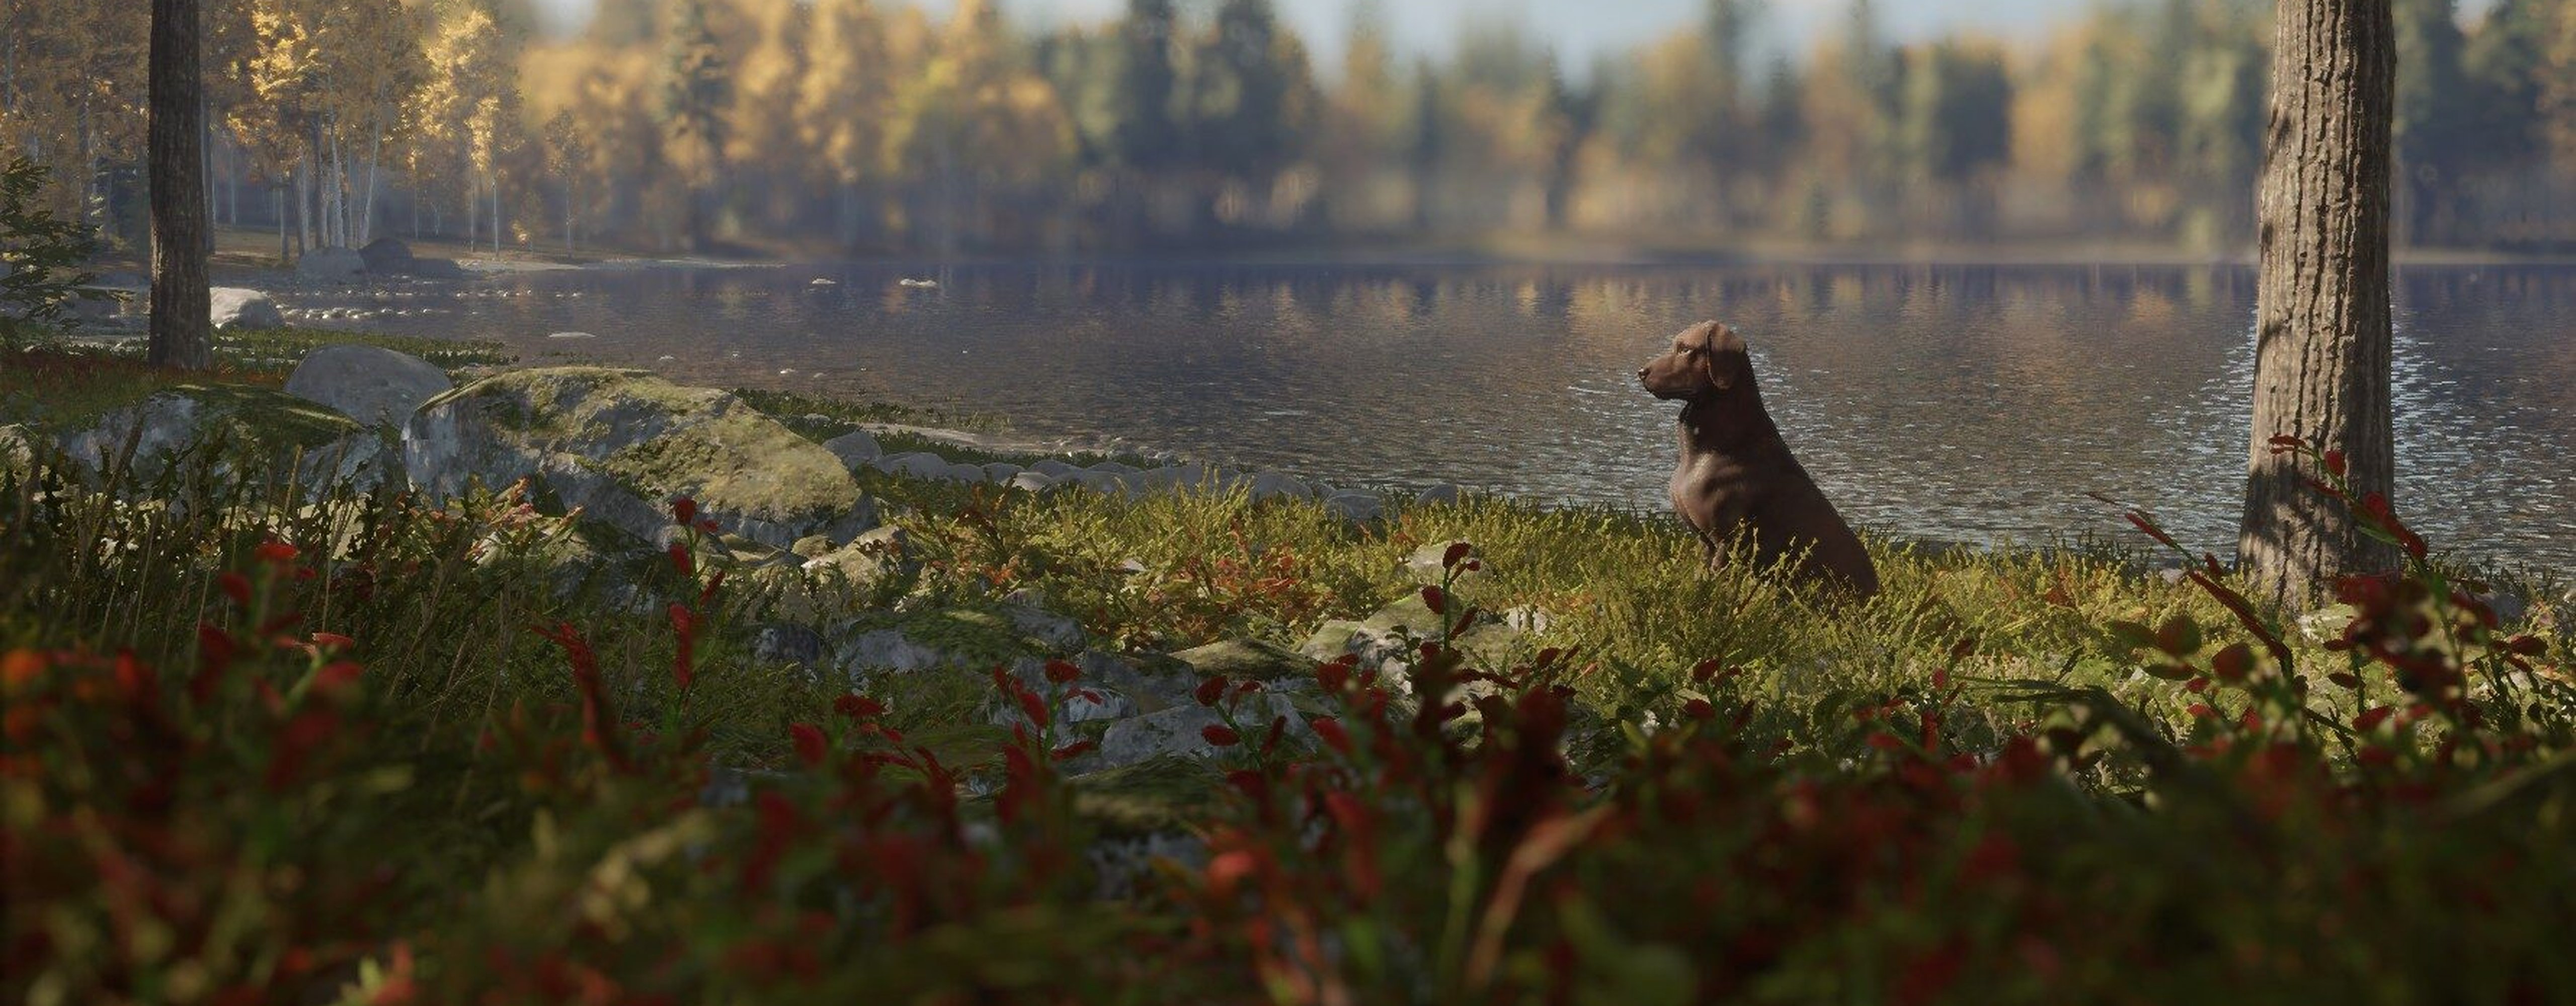 Labrador Retriever with the chocolate fur variety standing next to a lake.